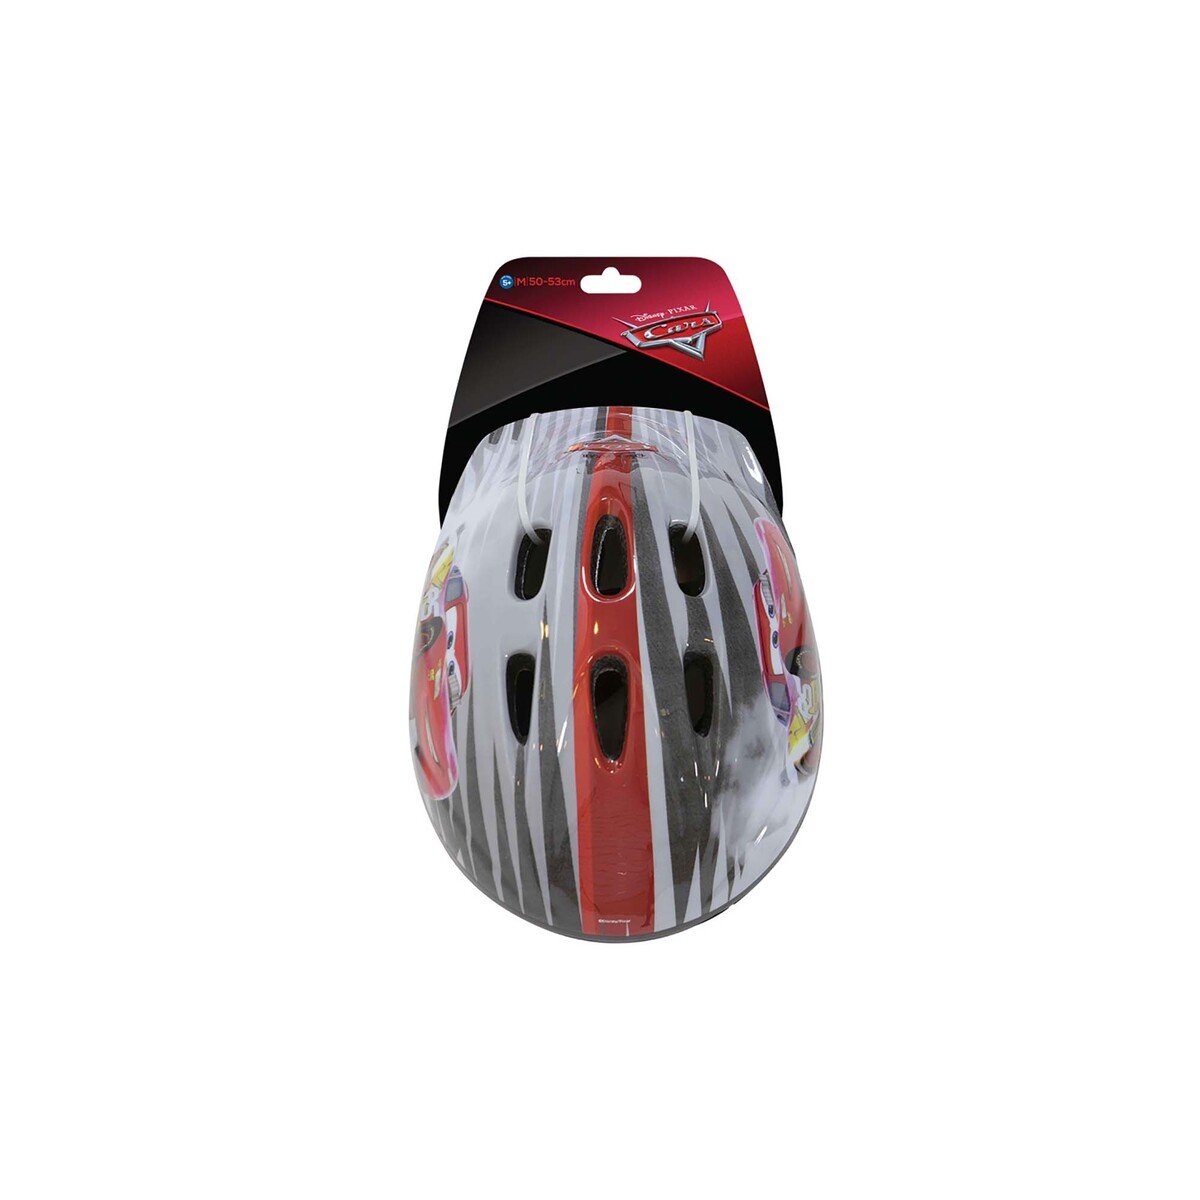 Spartan Cars Helmet for Kids SP-9010